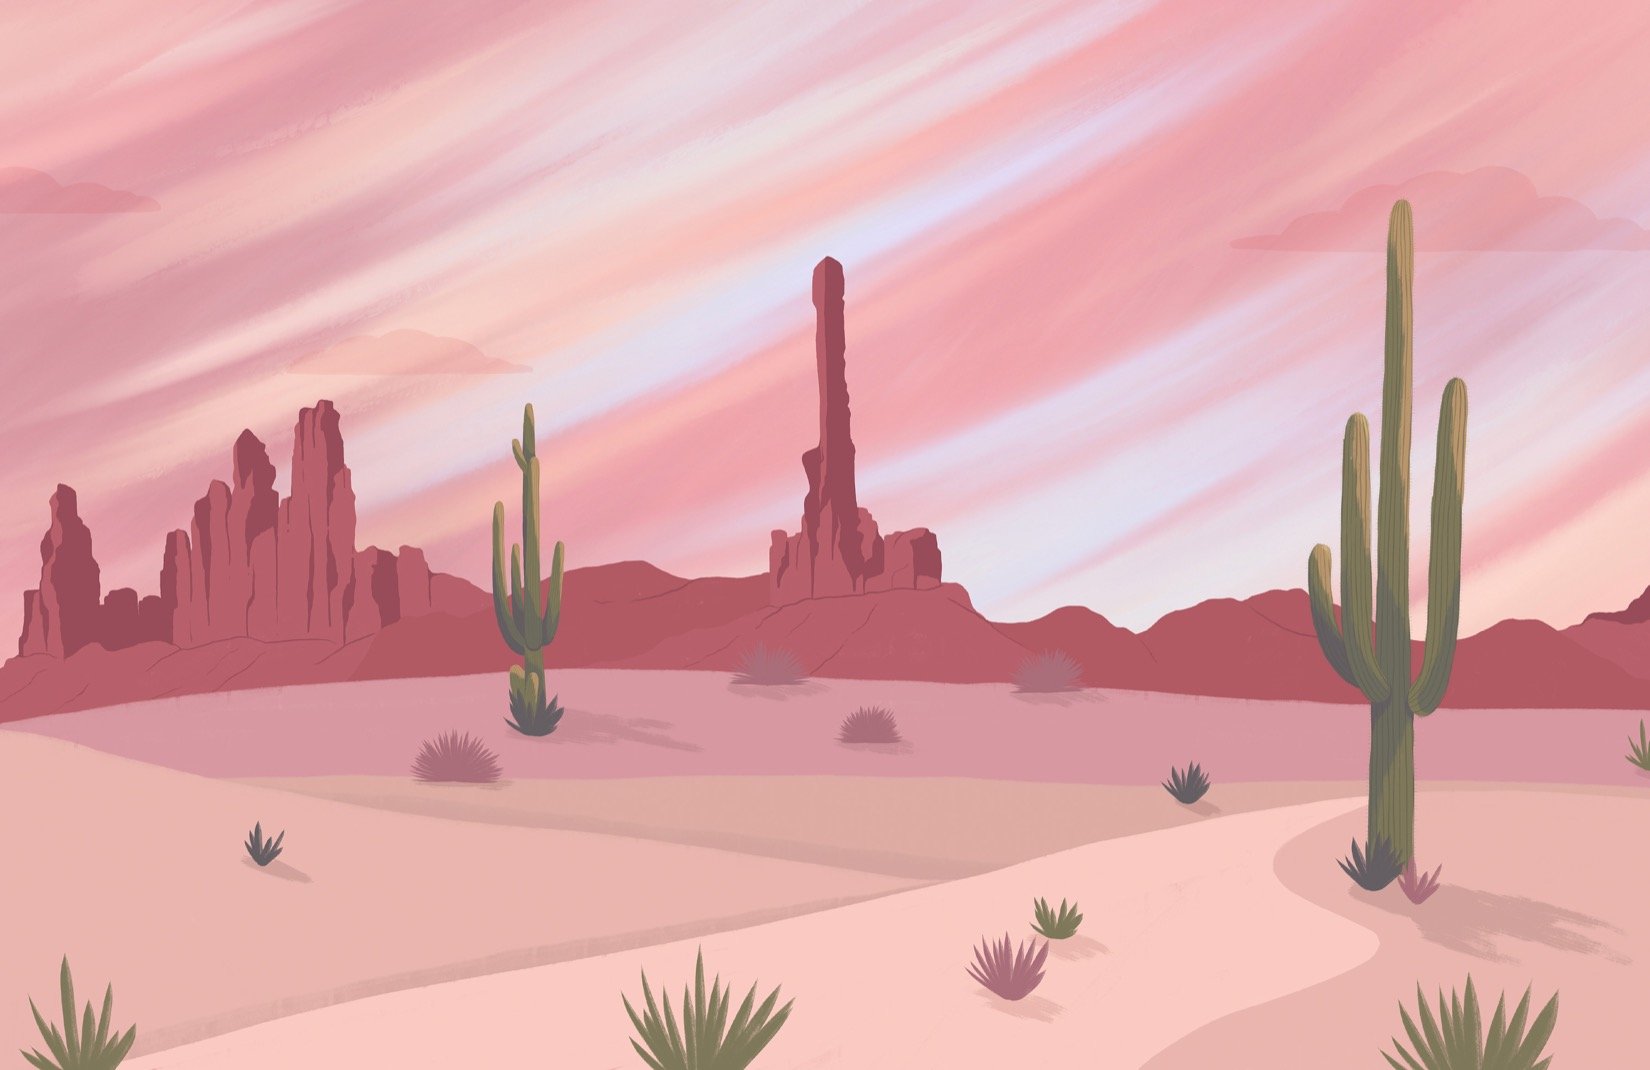 Cactus Desert Wallpaper. Wild West Design